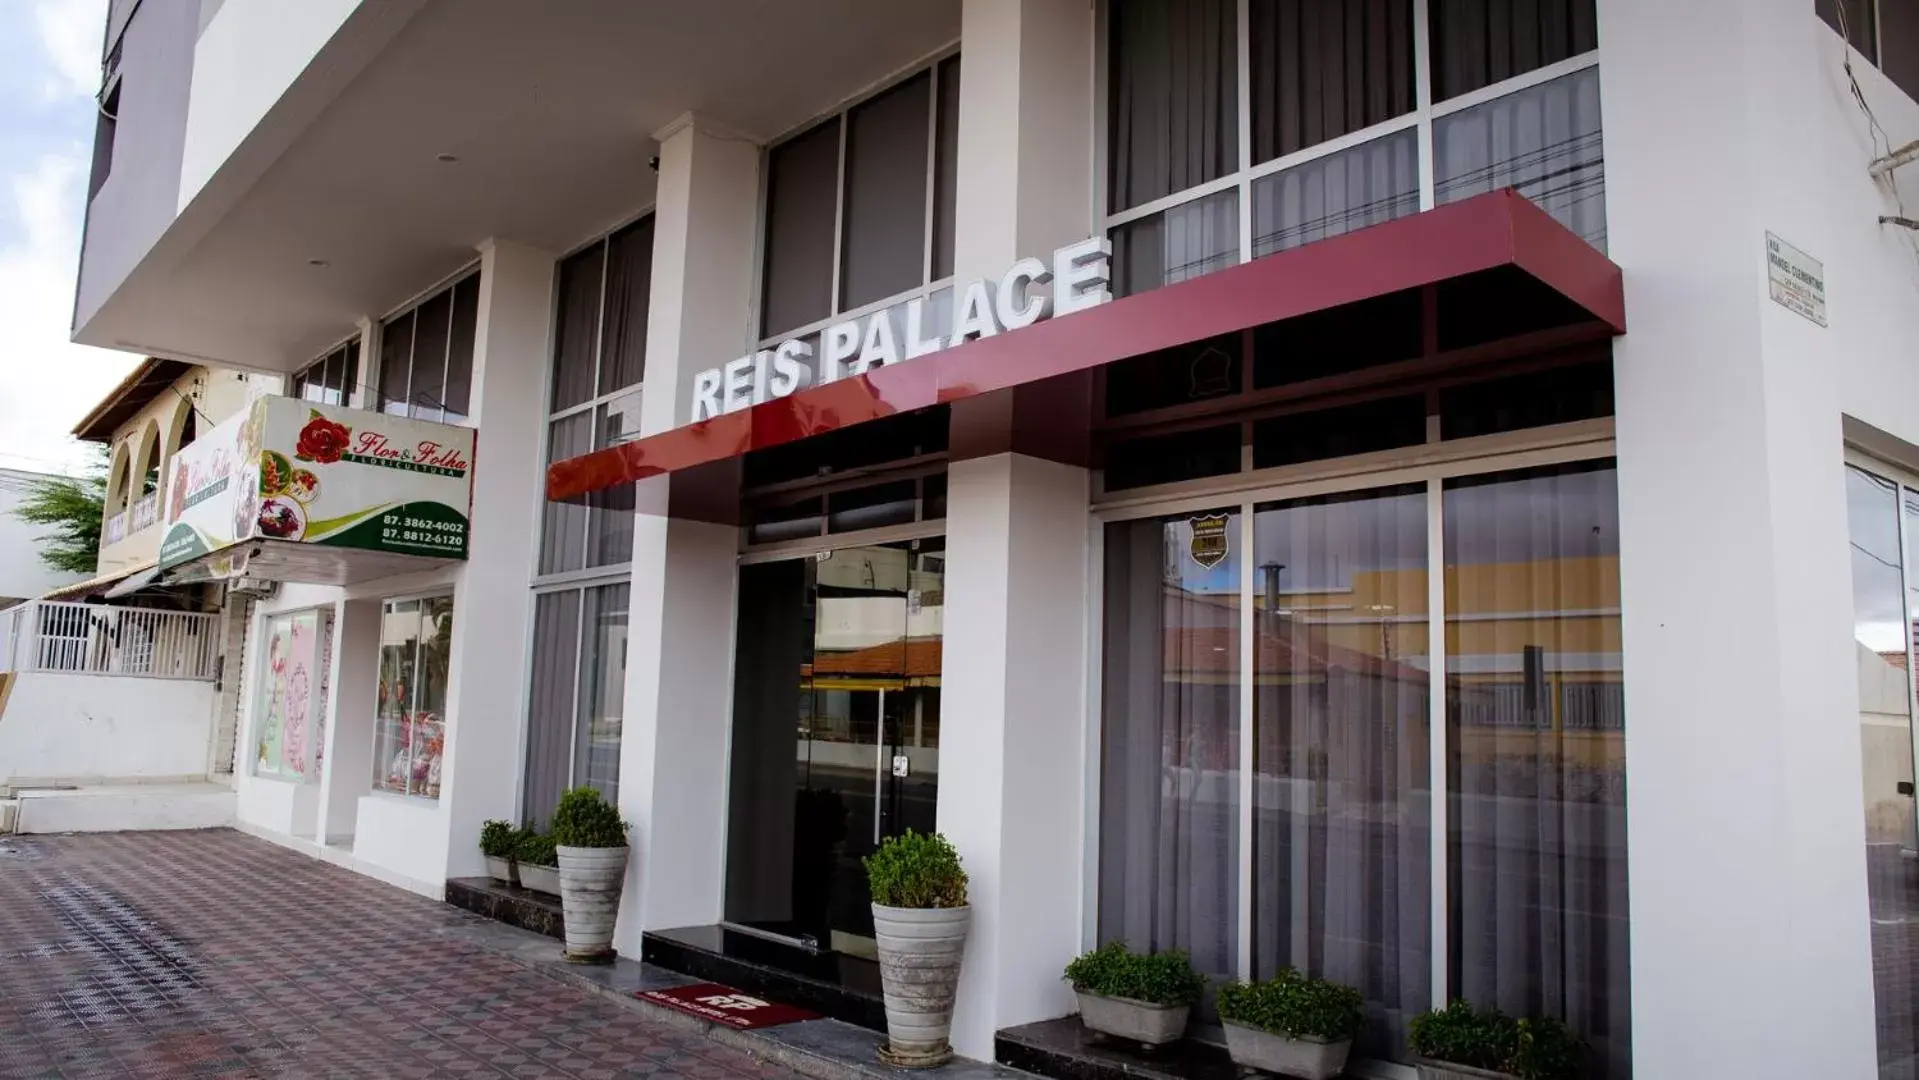 Facade/entrance in Reis Palace Hotel